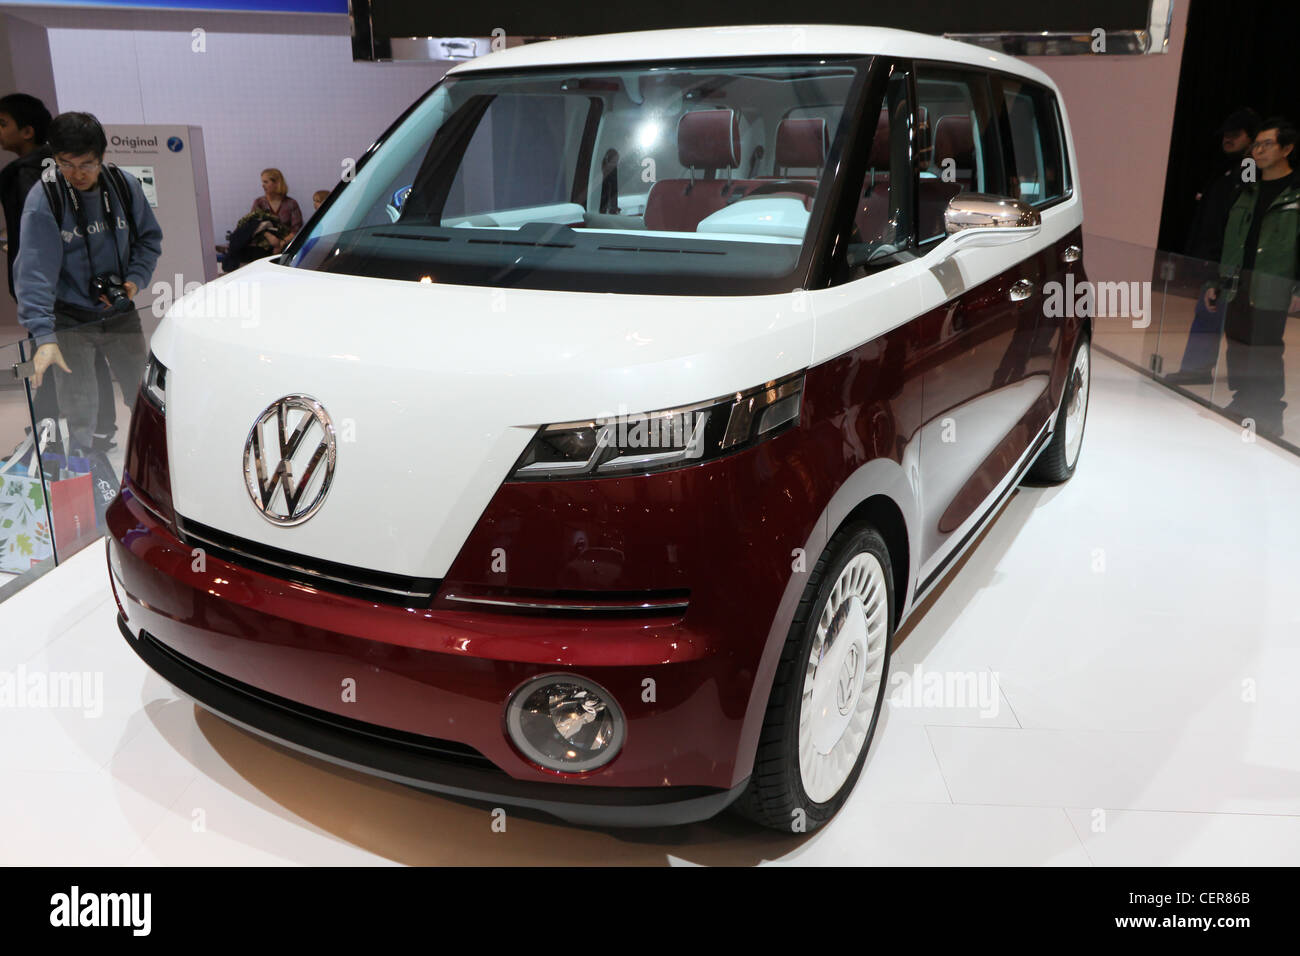 Volkswagen concept van hi-res stock photography and images - Alamy